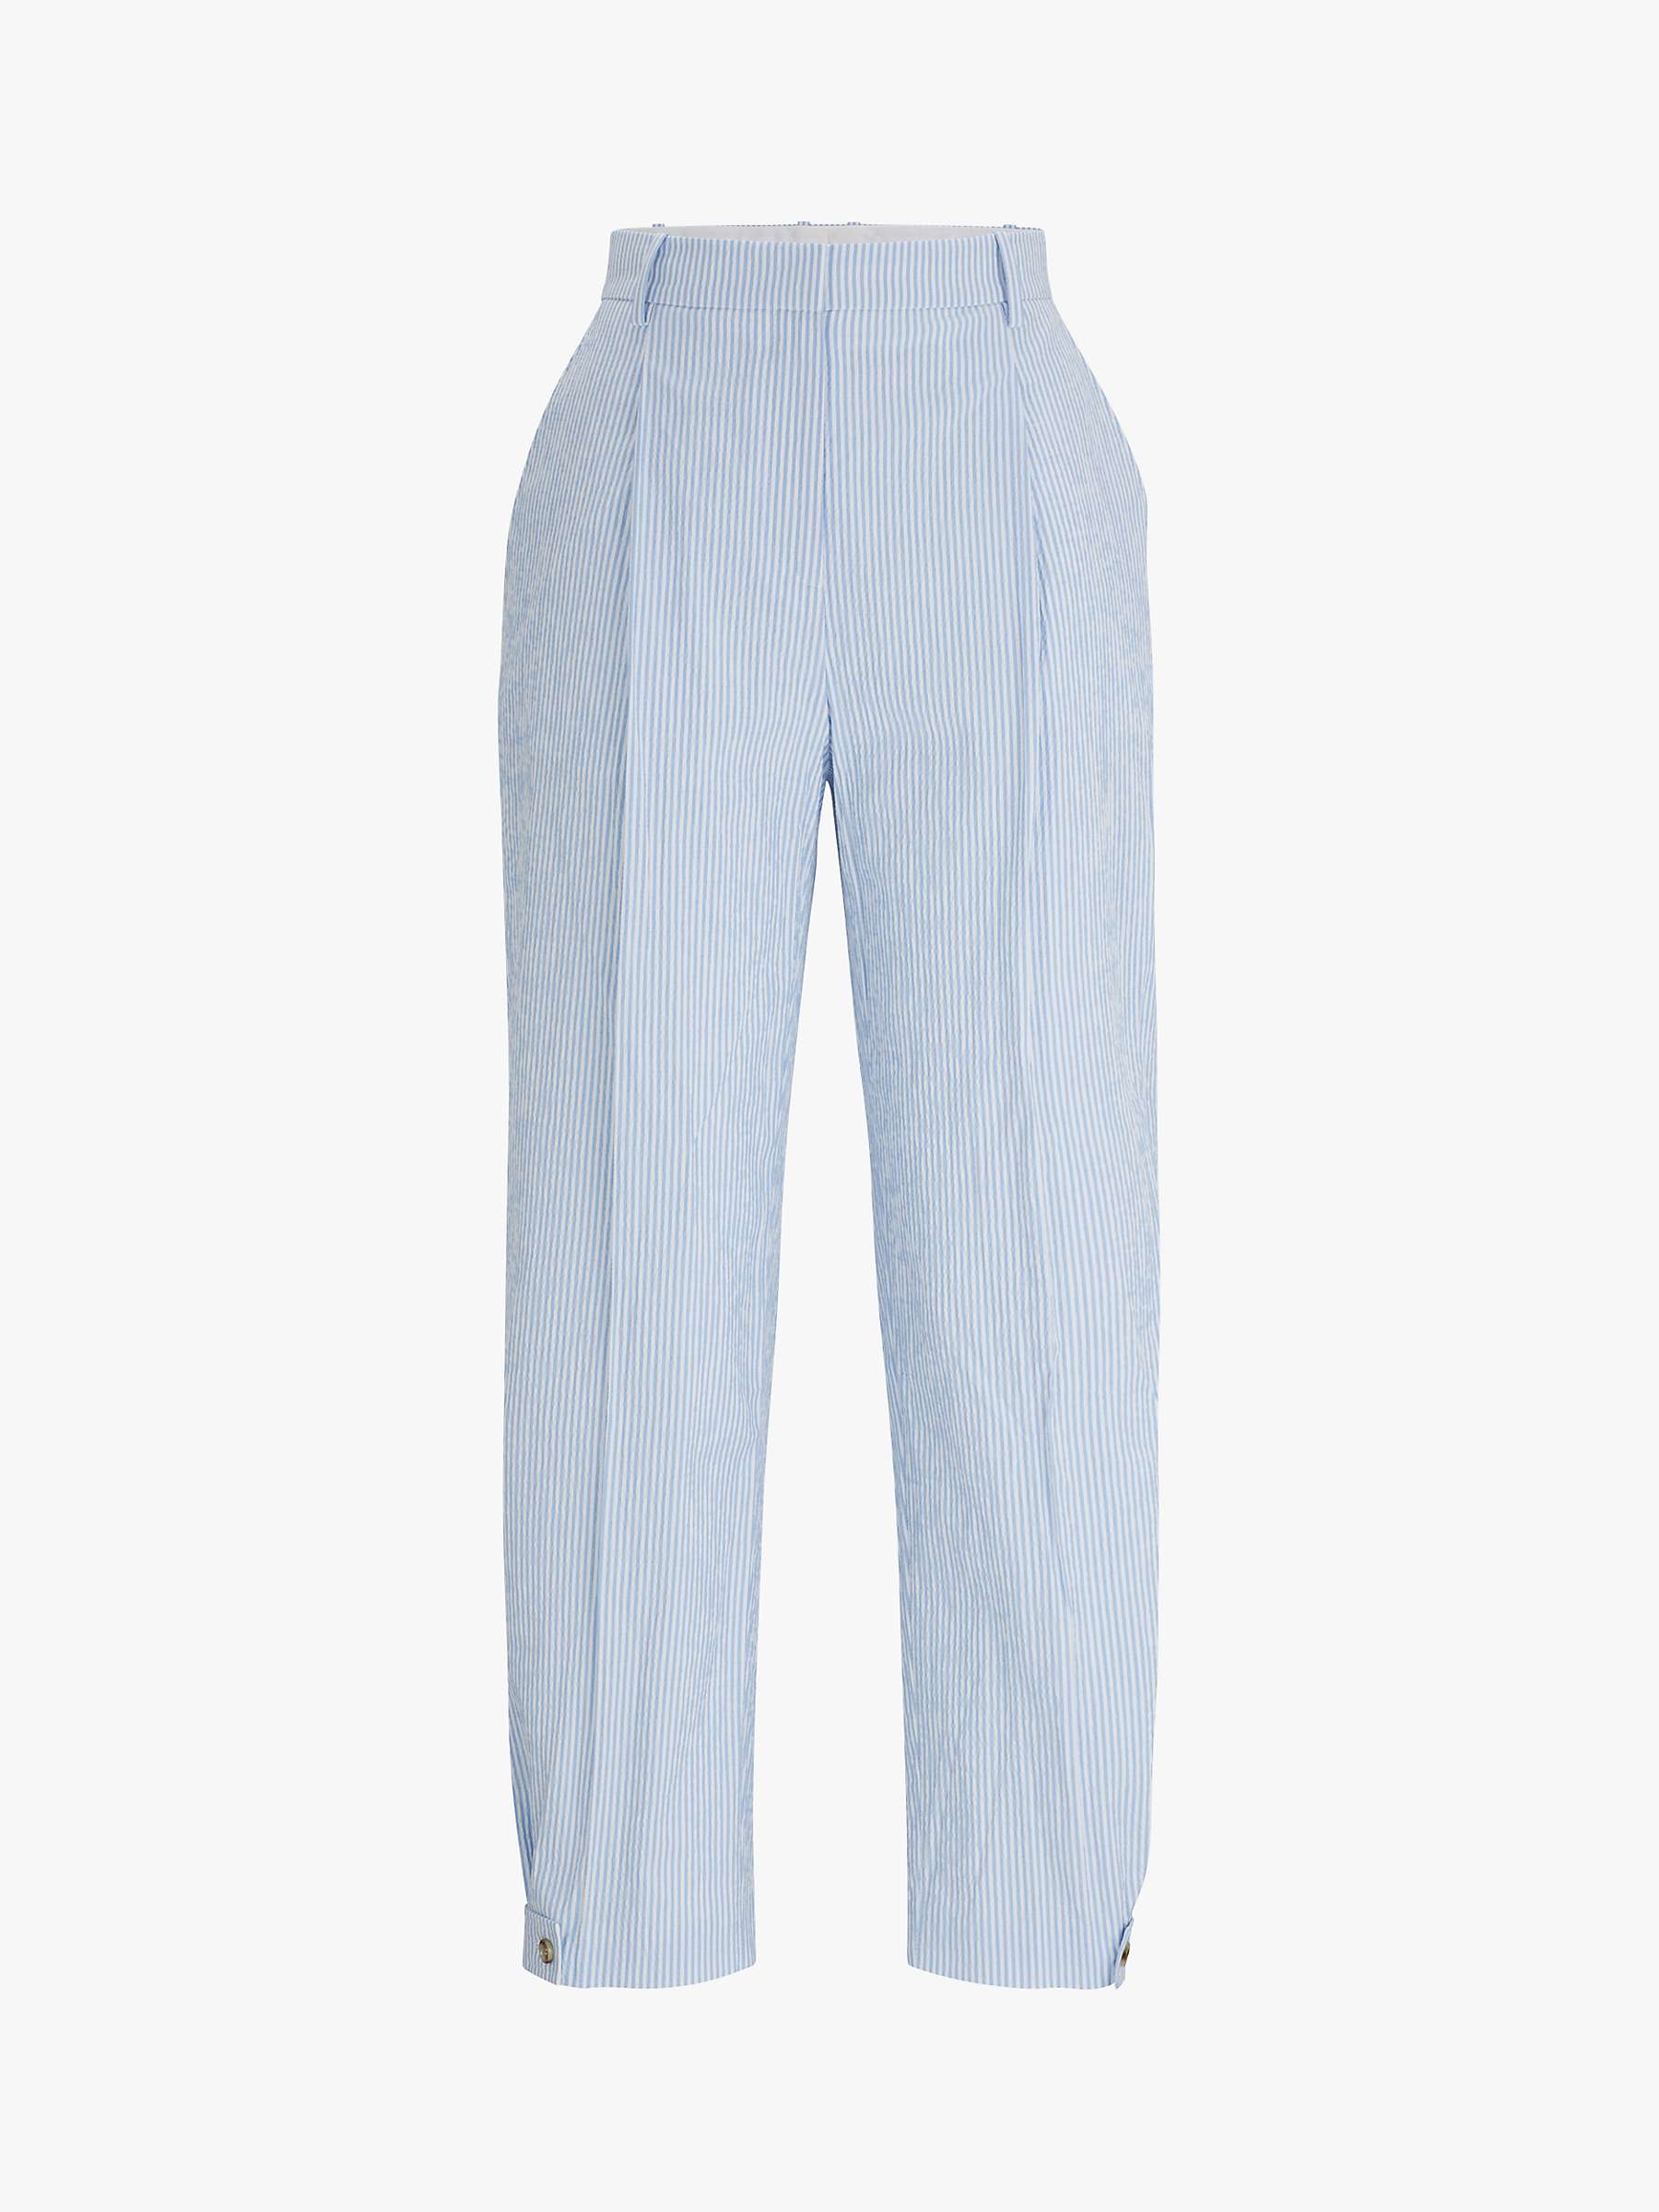 Buy BOSS Tanalie 969 Cotton Blend Trousers, Open Miscellaneous Online at johnlewis.com